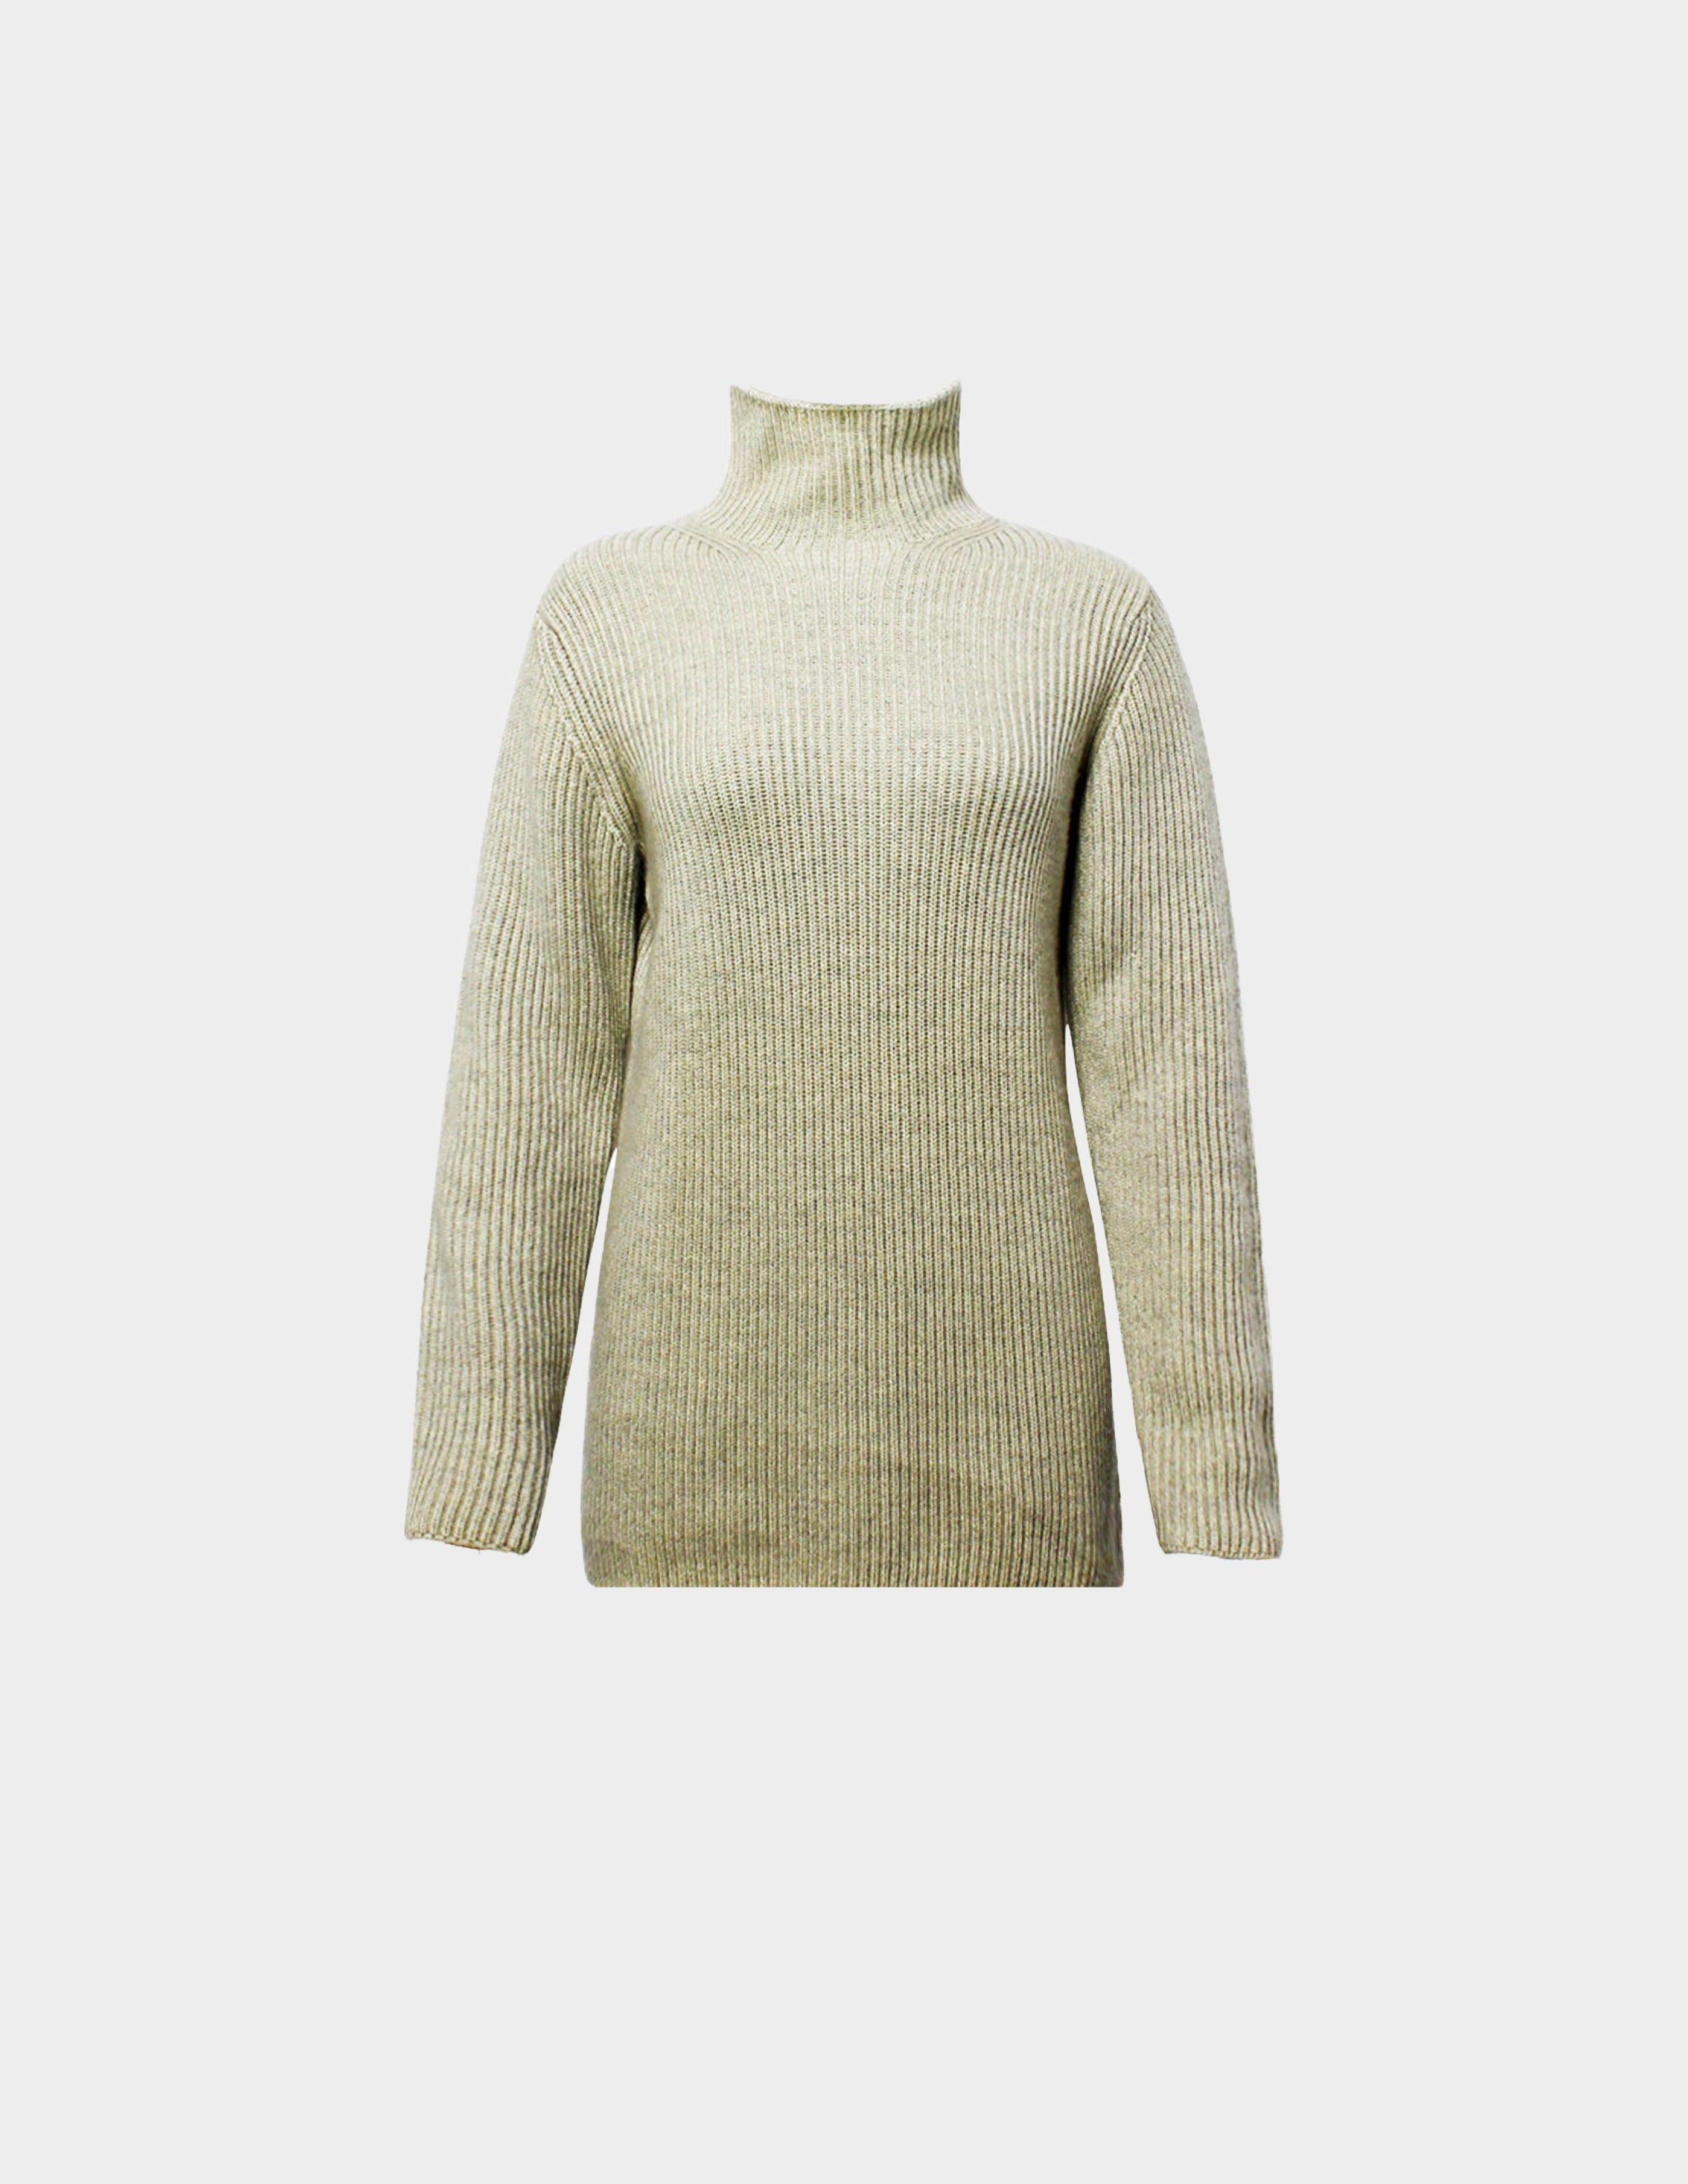 Hermès by Martin Margiela FW 2000 Turtleneck Rib Knit Sweater